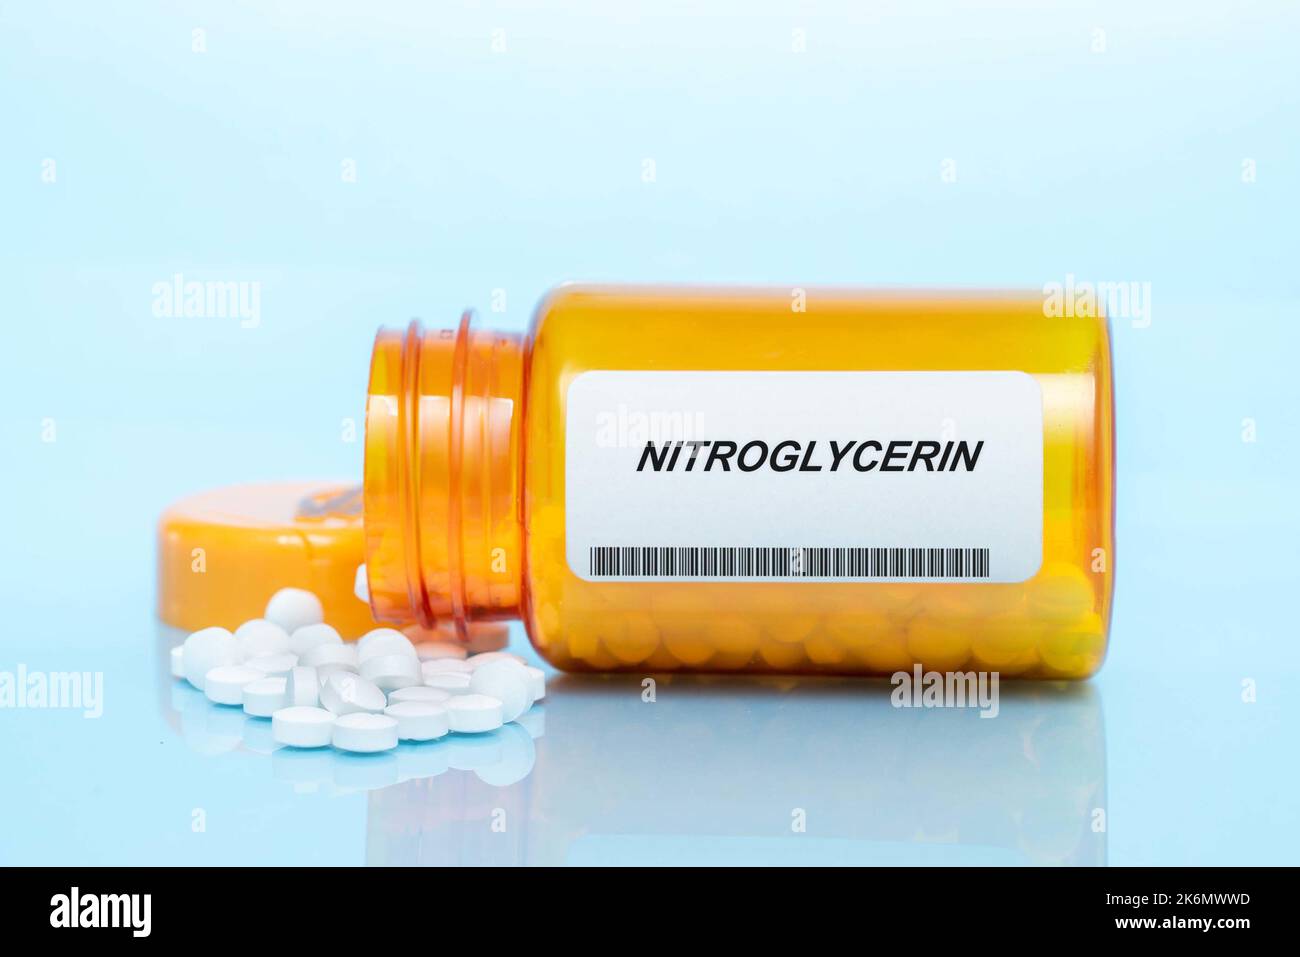 Nitroglycerin pill bottle, conceptual image Stock Photo